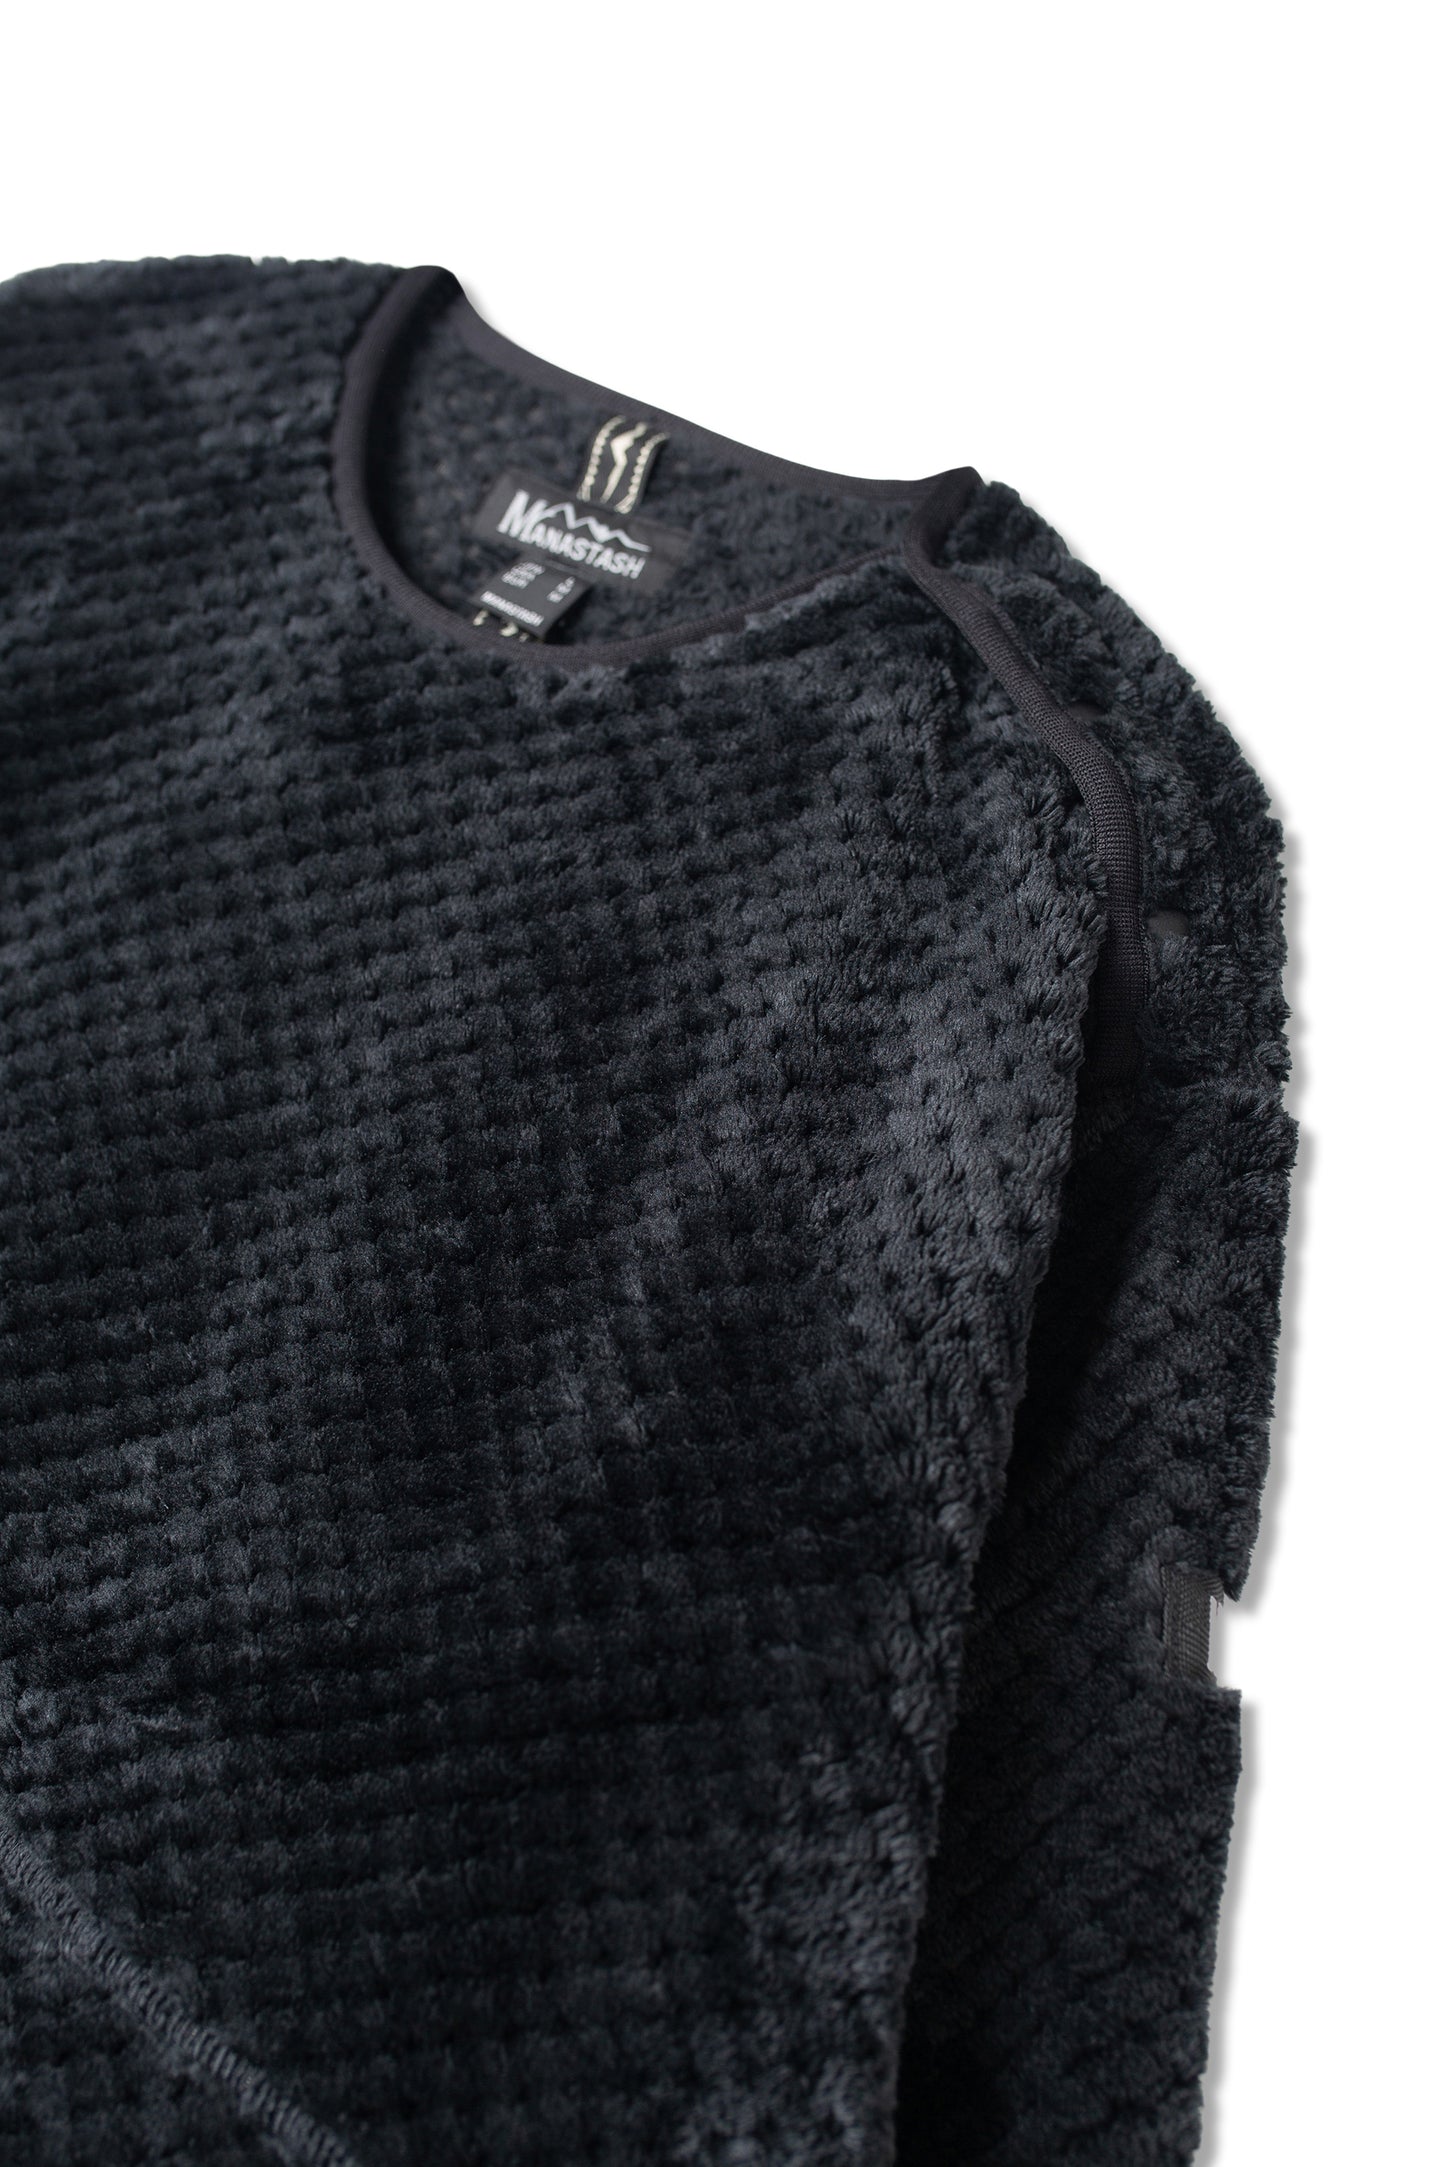 Thermal Fleece Pullover (Black)